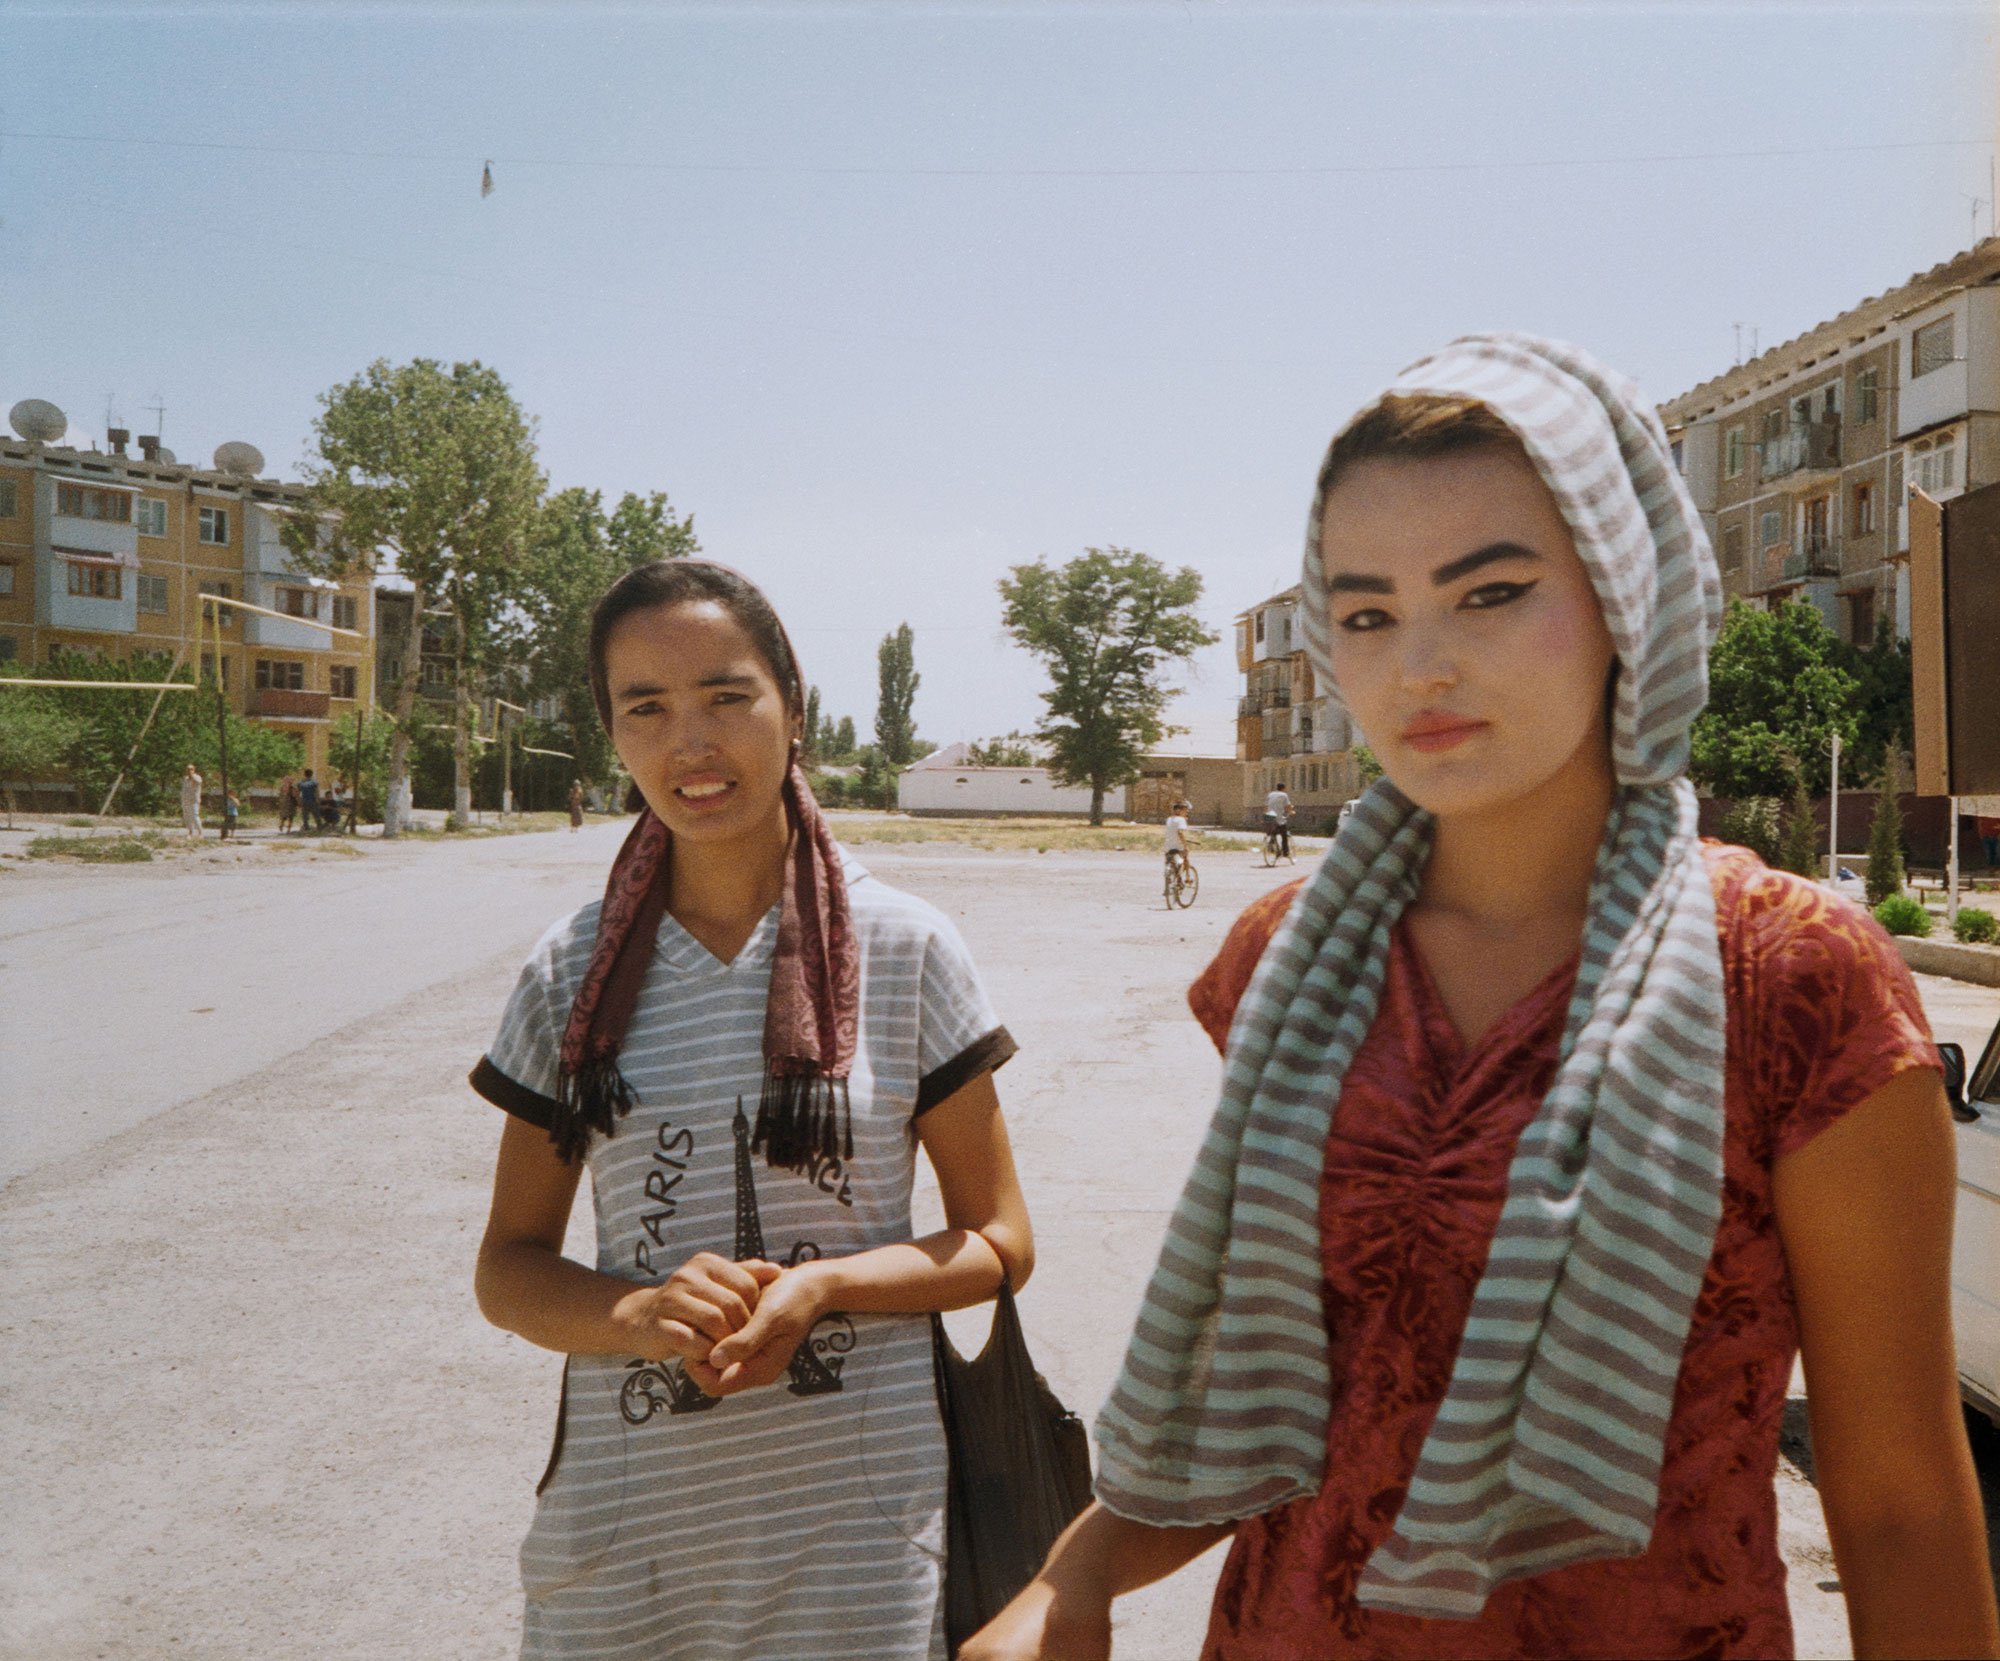 Daring photos show womanhood and forbidden love in contemporary Uzbekistan